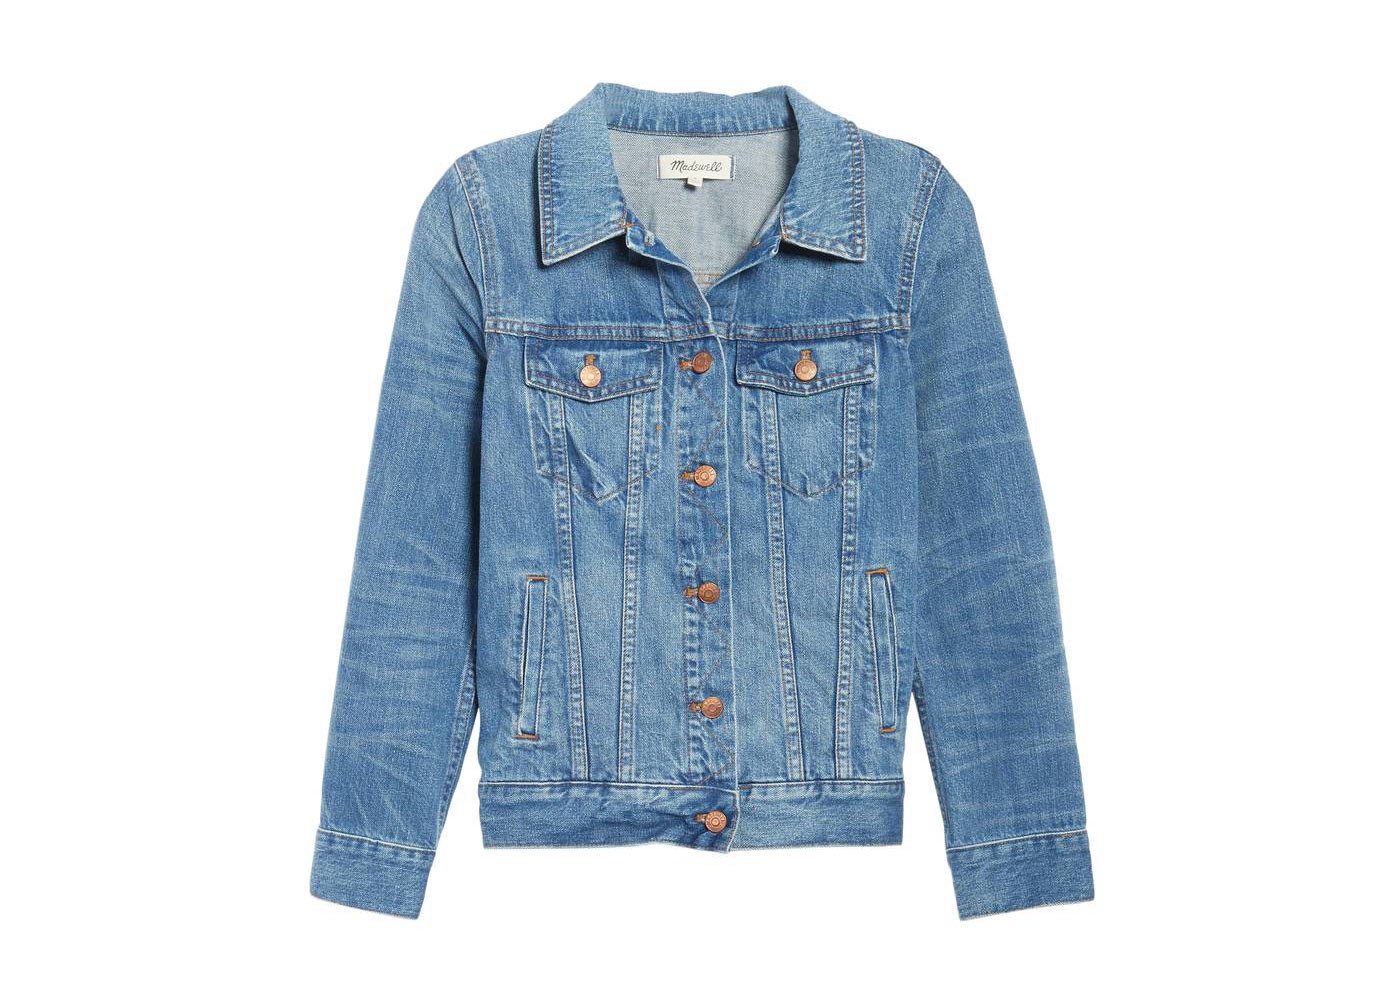 Style + Design Travel Shop denim jacket outerwear button jeans textile sleeve pocket product